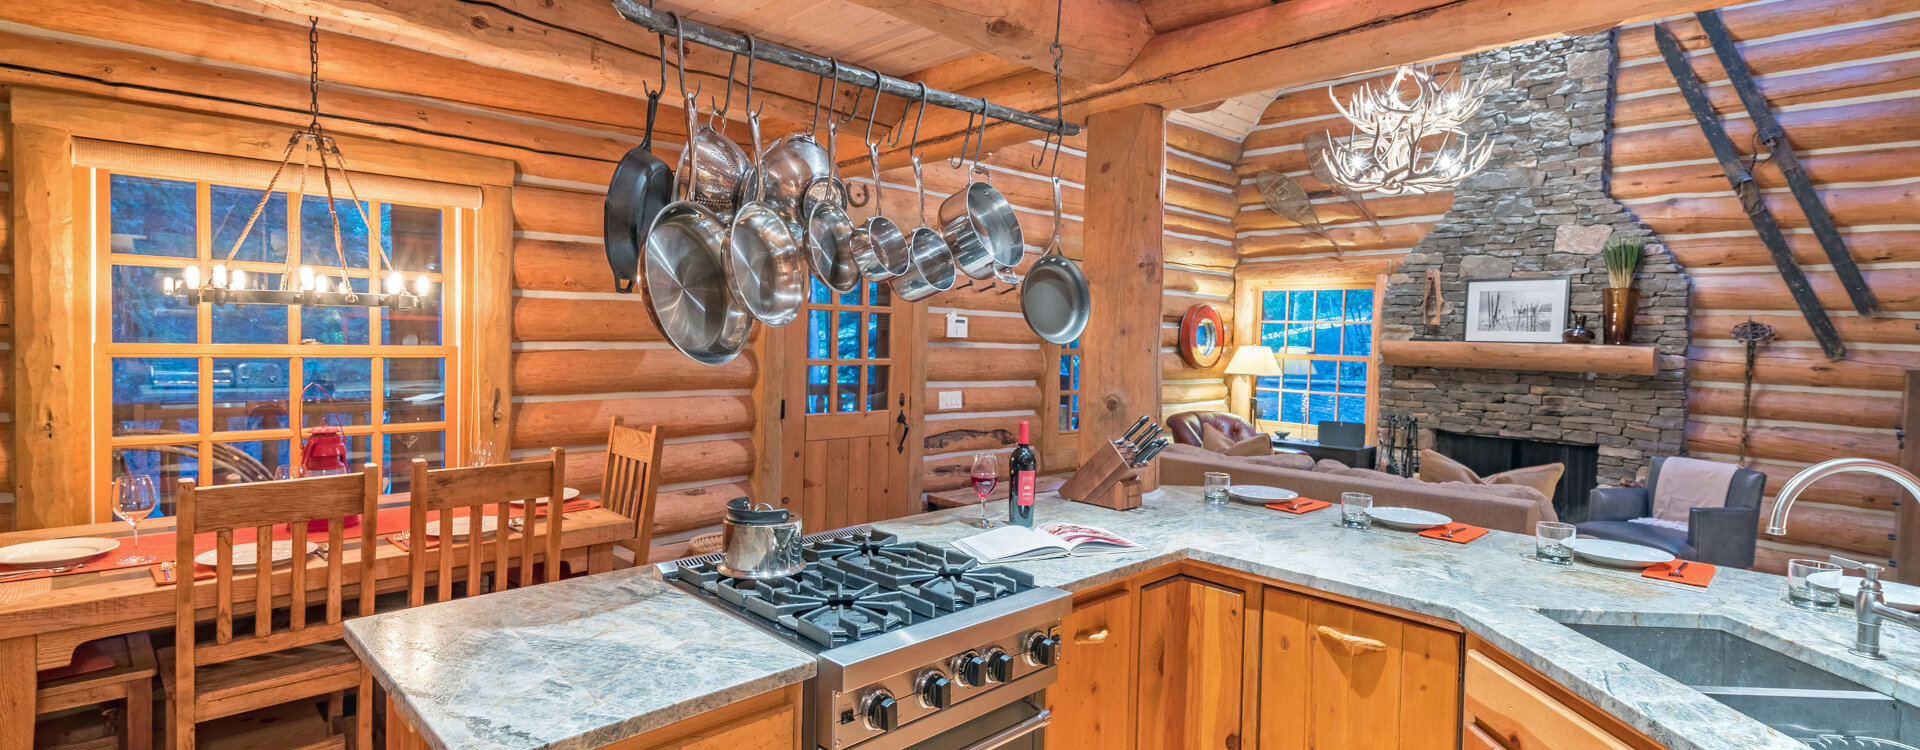 9-Telluride-Yellow-Brick-Cabin-Kitchen-to-Dining